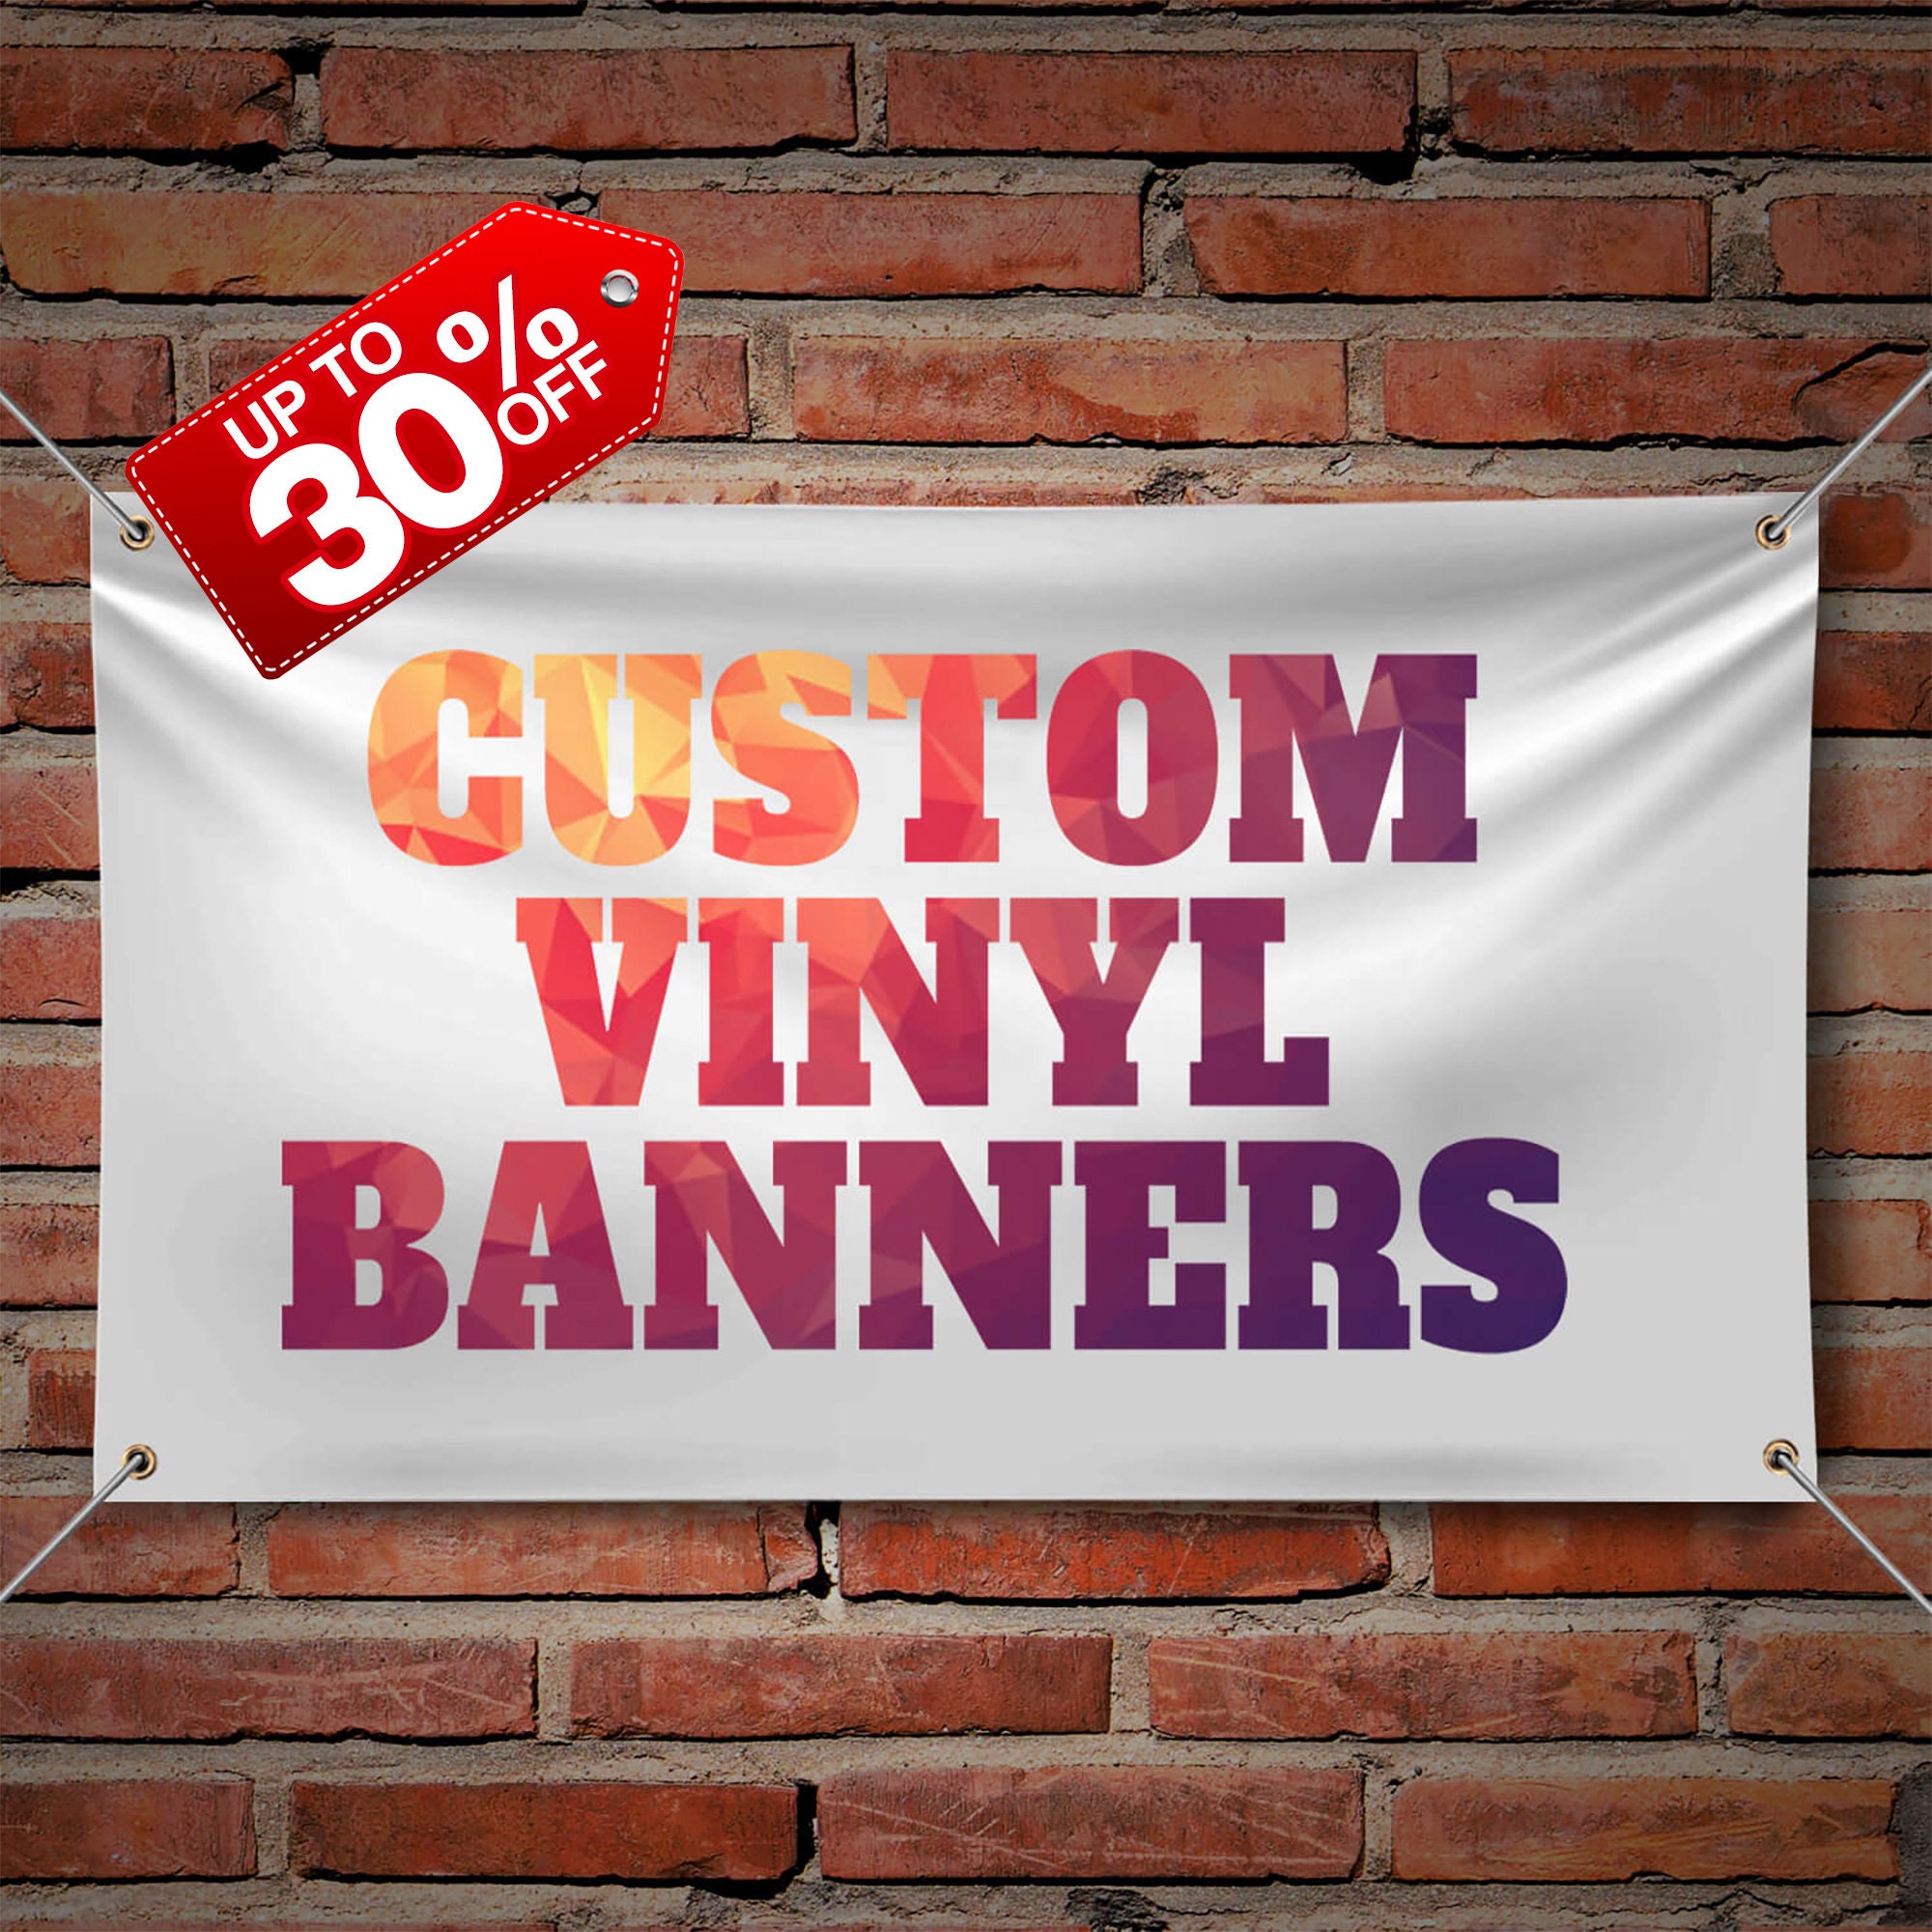 Custom Vinyl Wall Letters by BannerBuzz